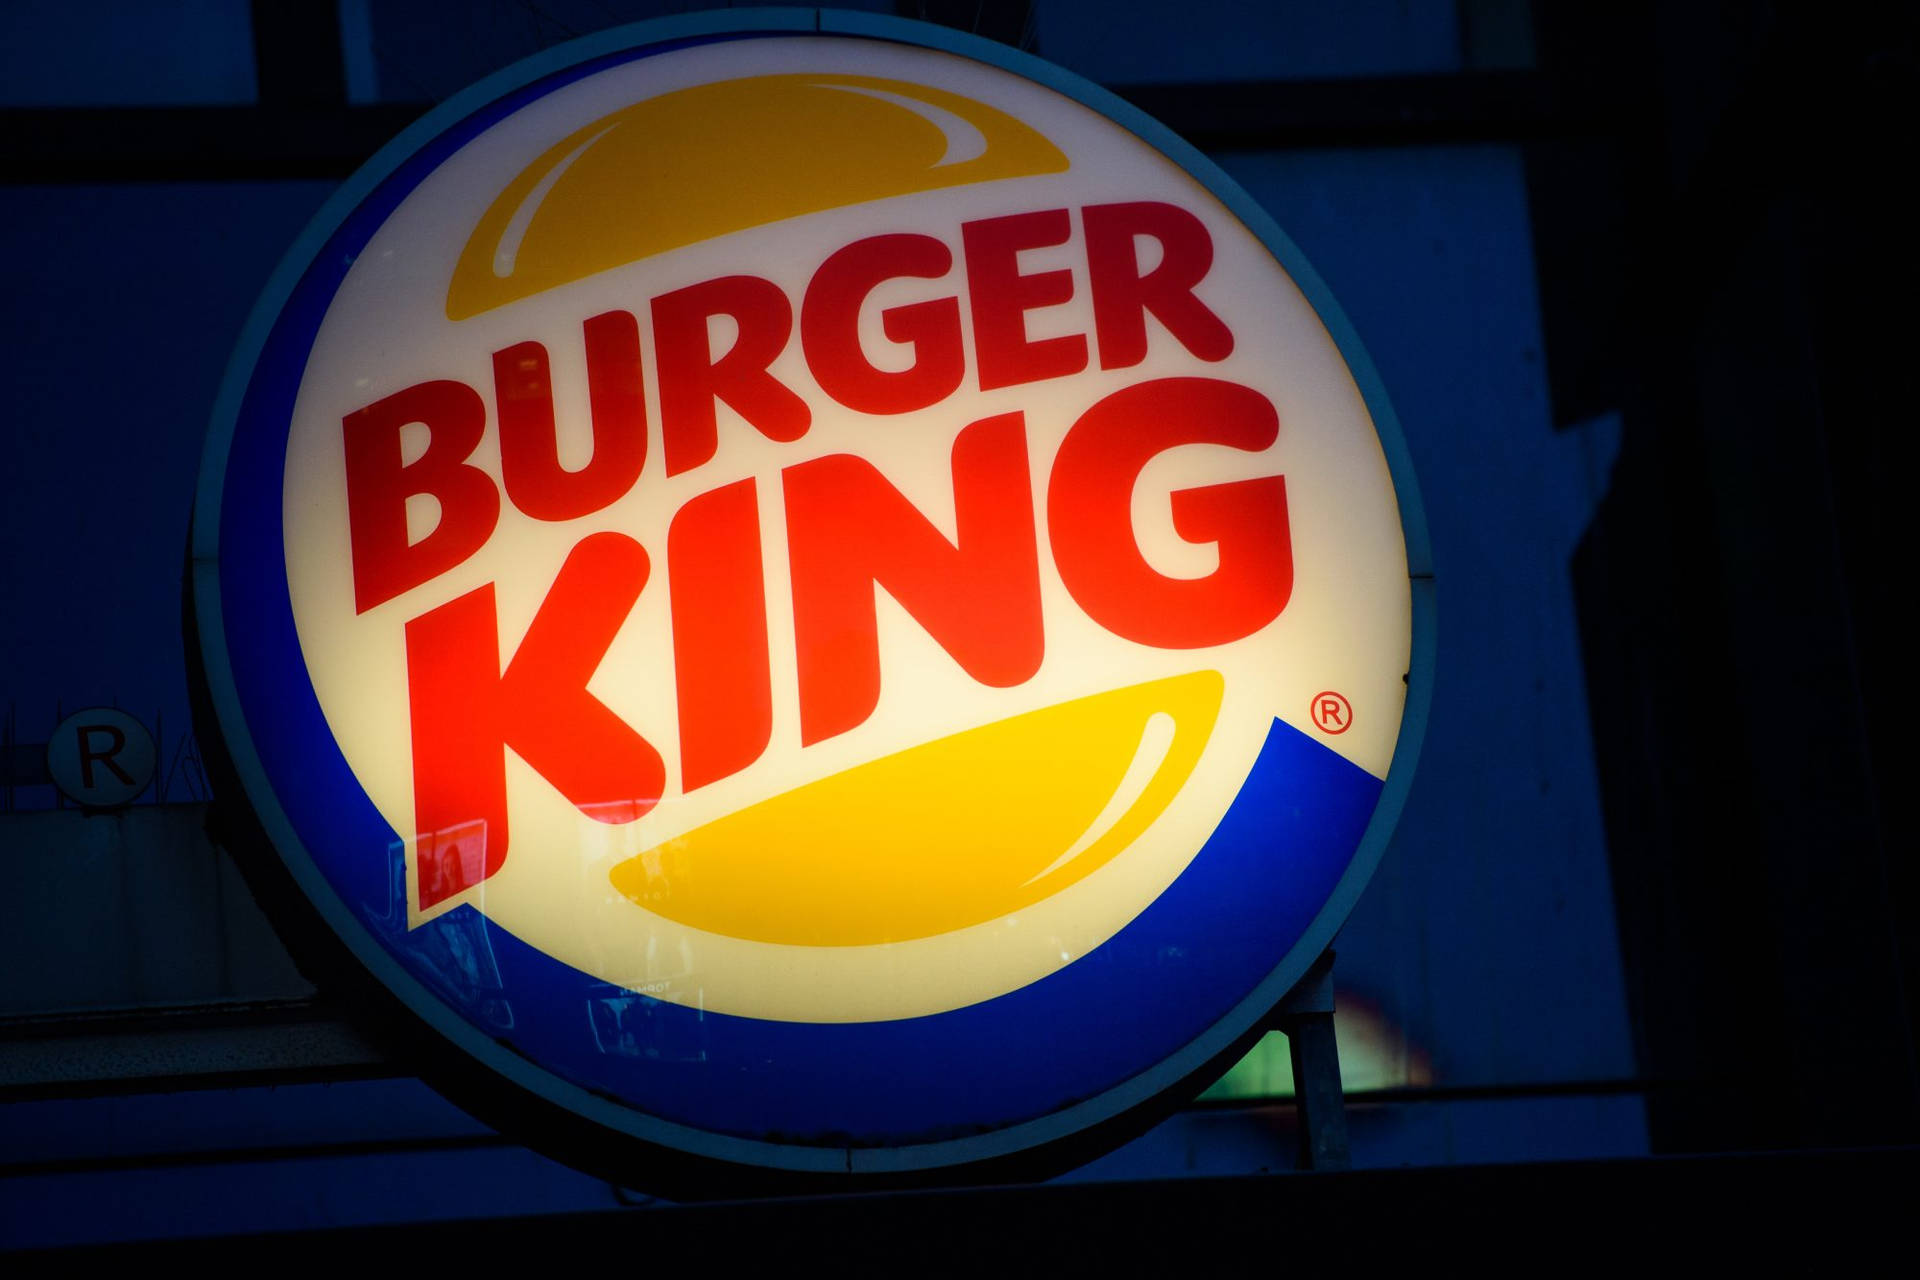 Captivating Night View of Burger King Signage Wallpaper